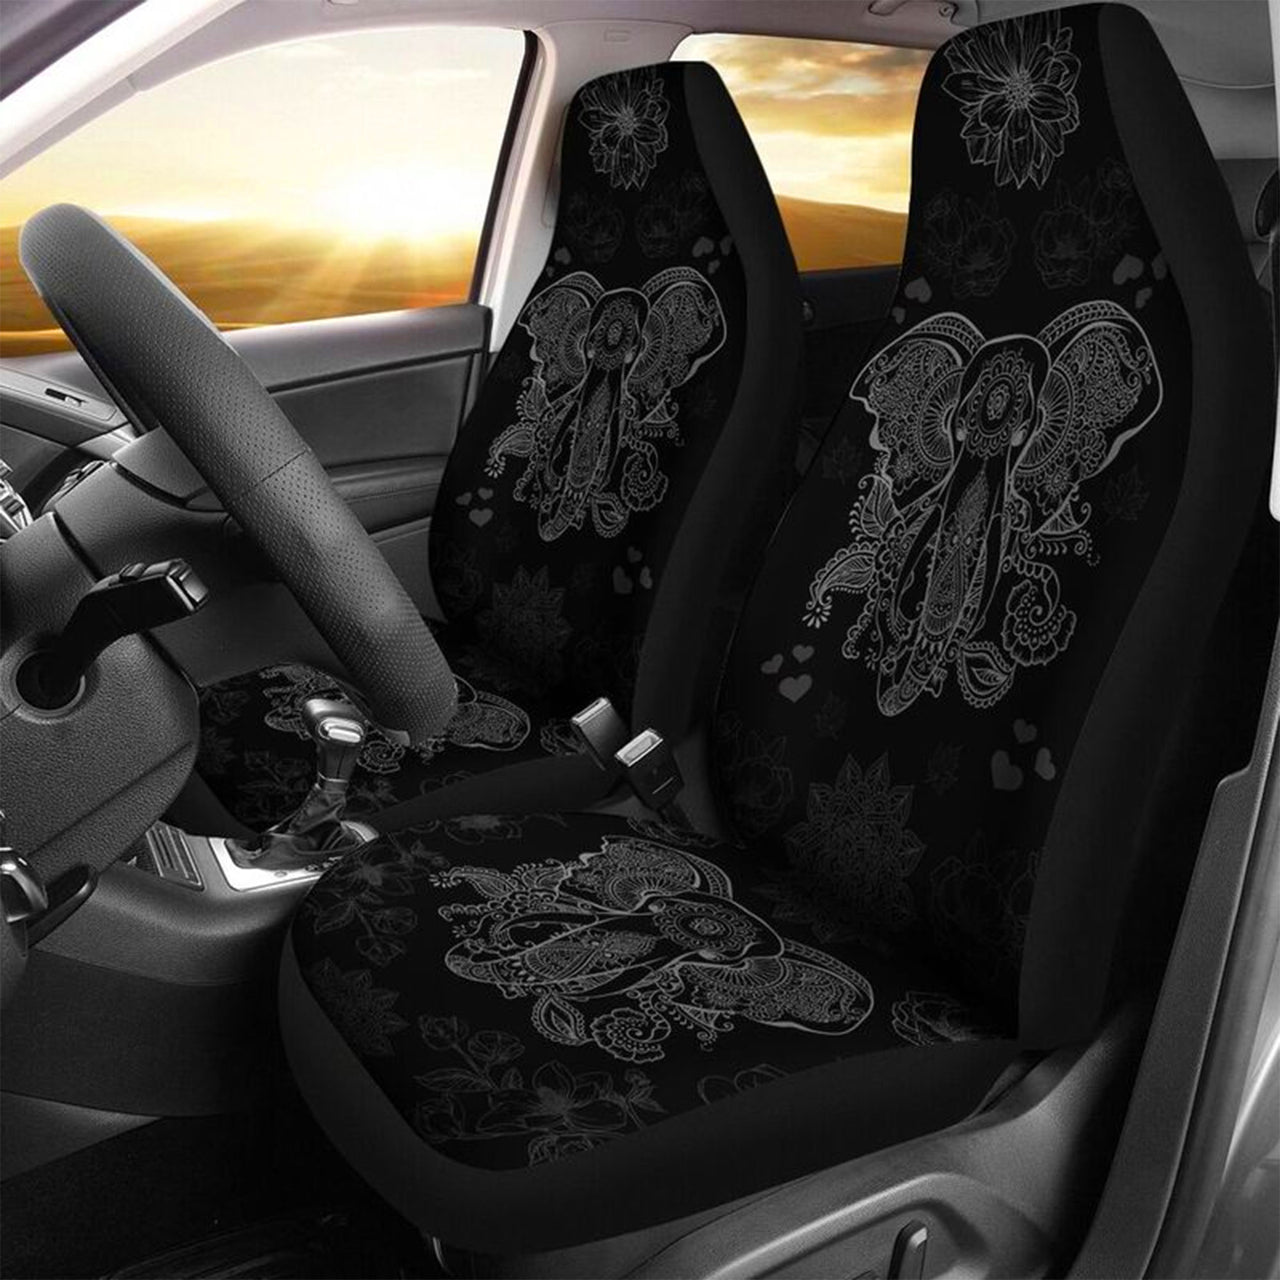 Custom Car Seat Cover Mandala Flower Elephant Seat Covers for Cars